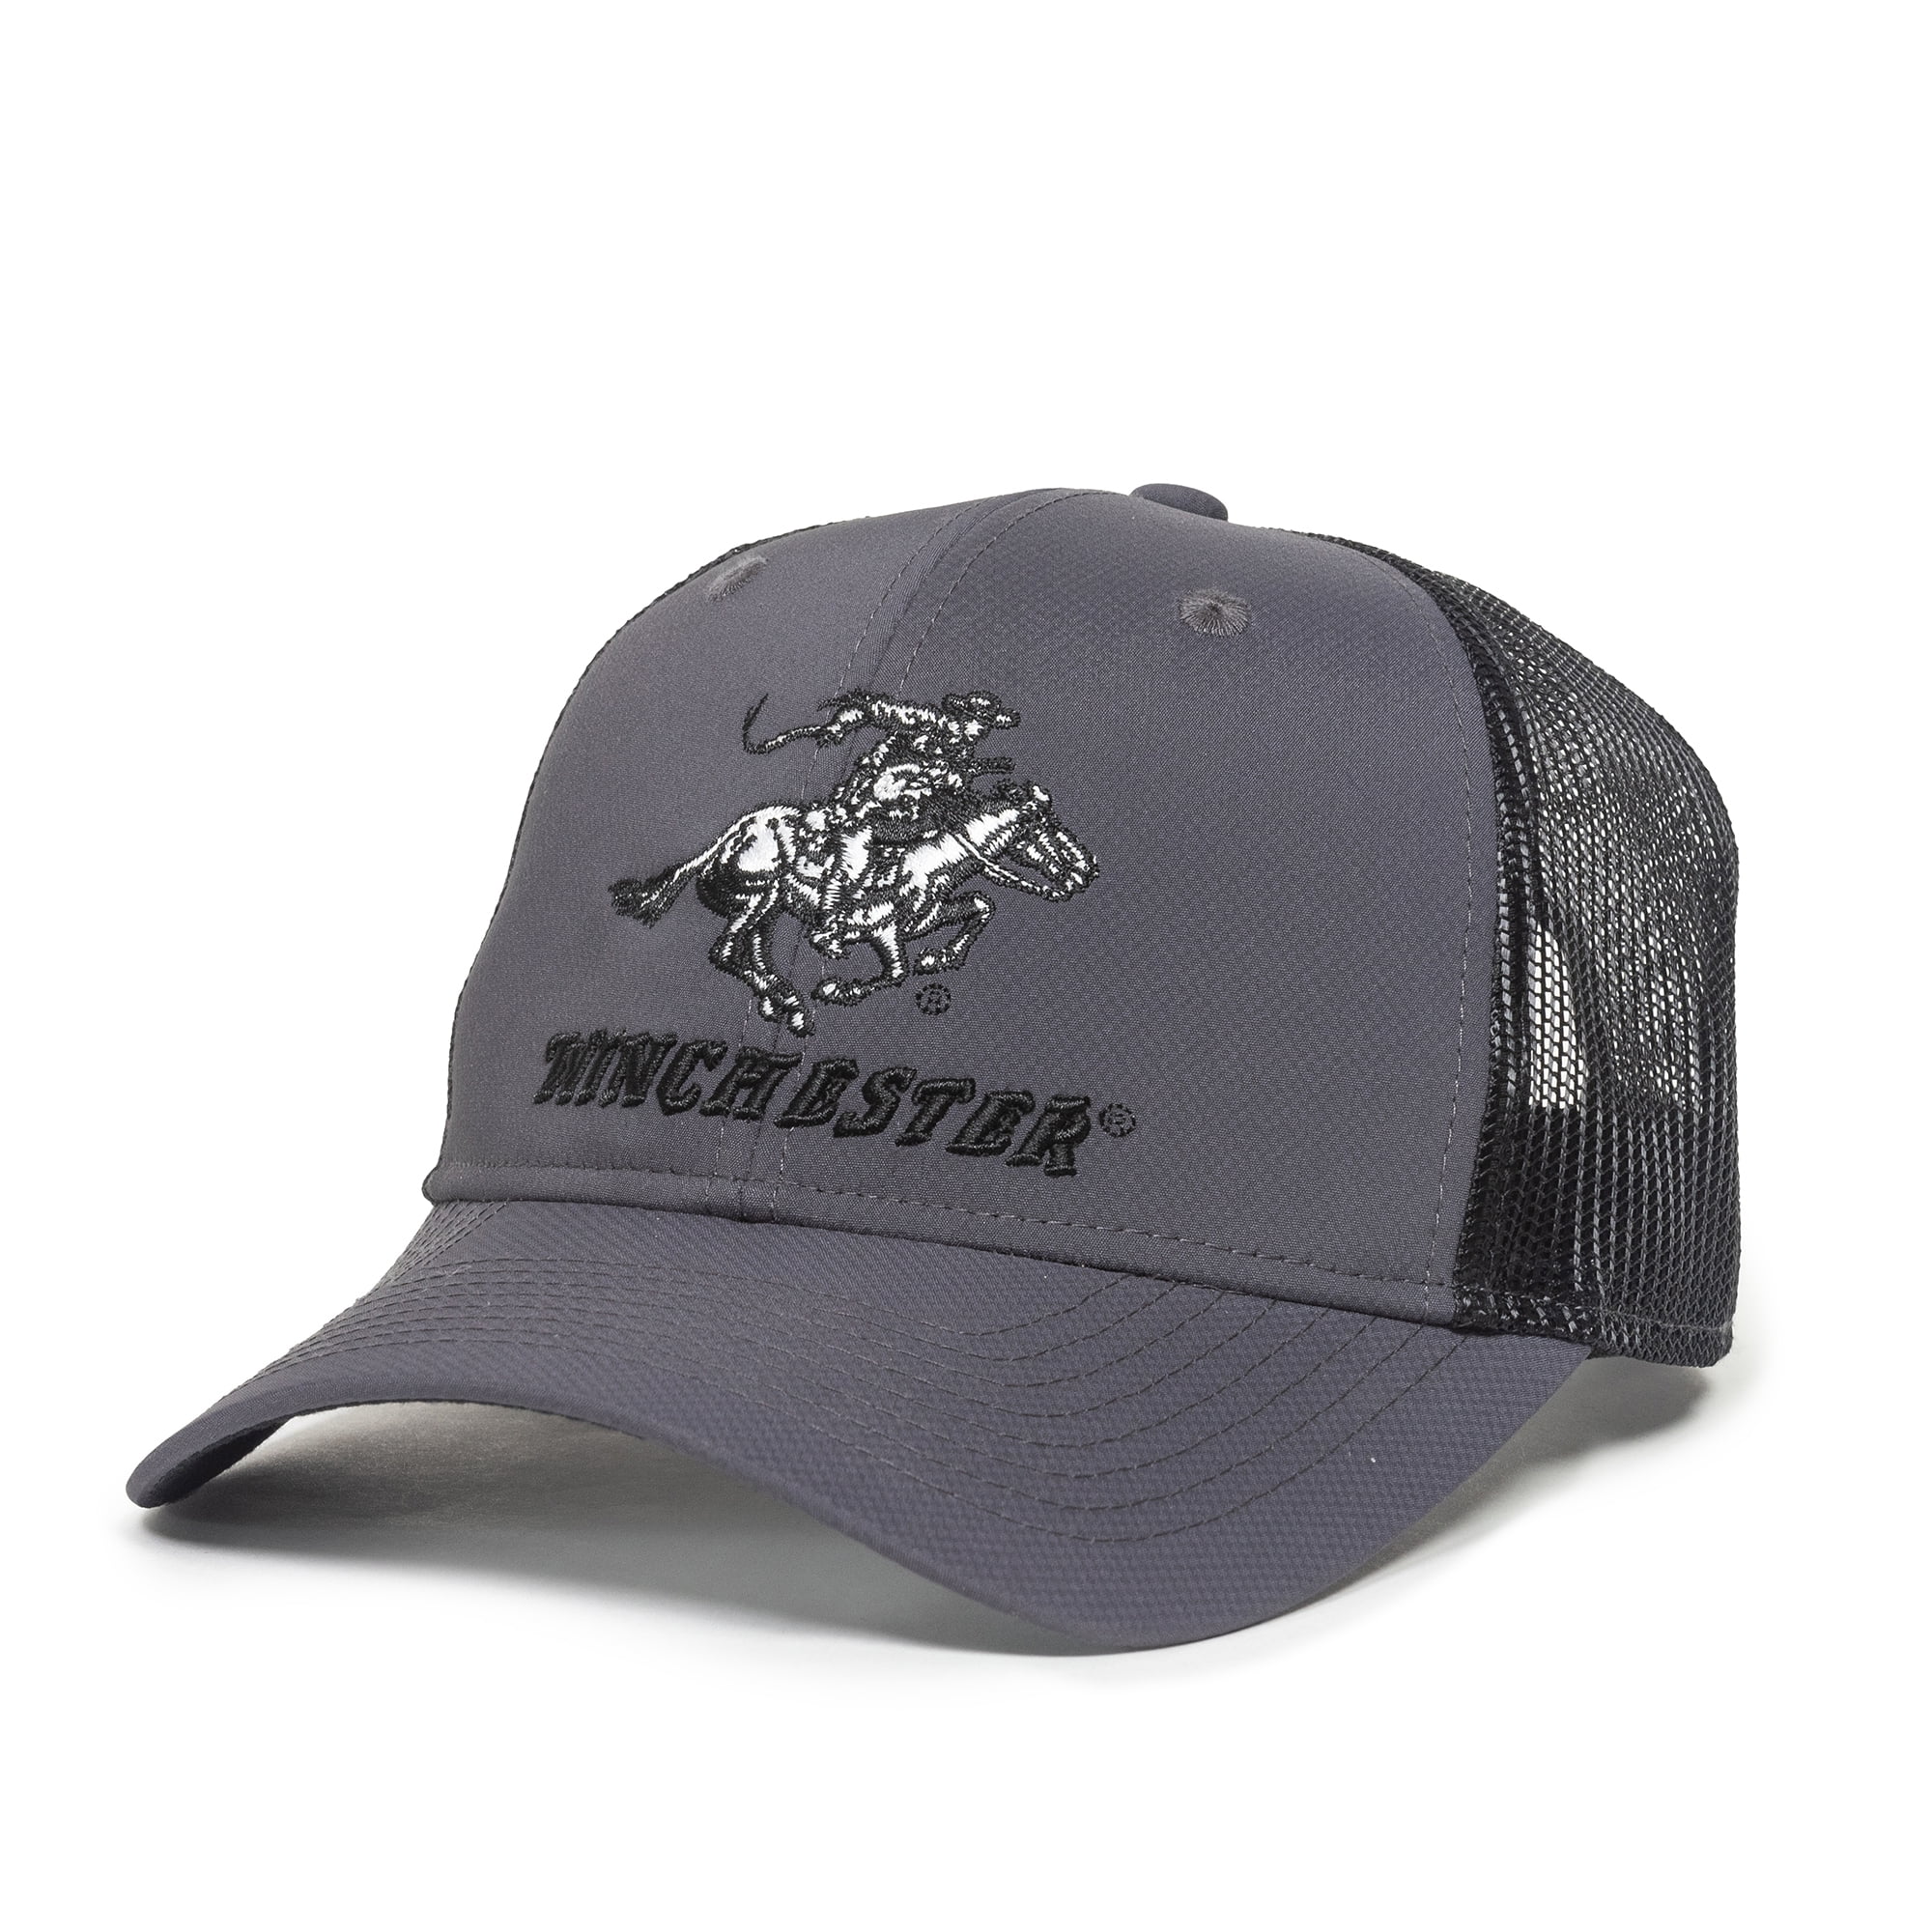 Winchester Licensed Meshback Shooting Cap, Grey with Black Mesh, Adult, Adjustable